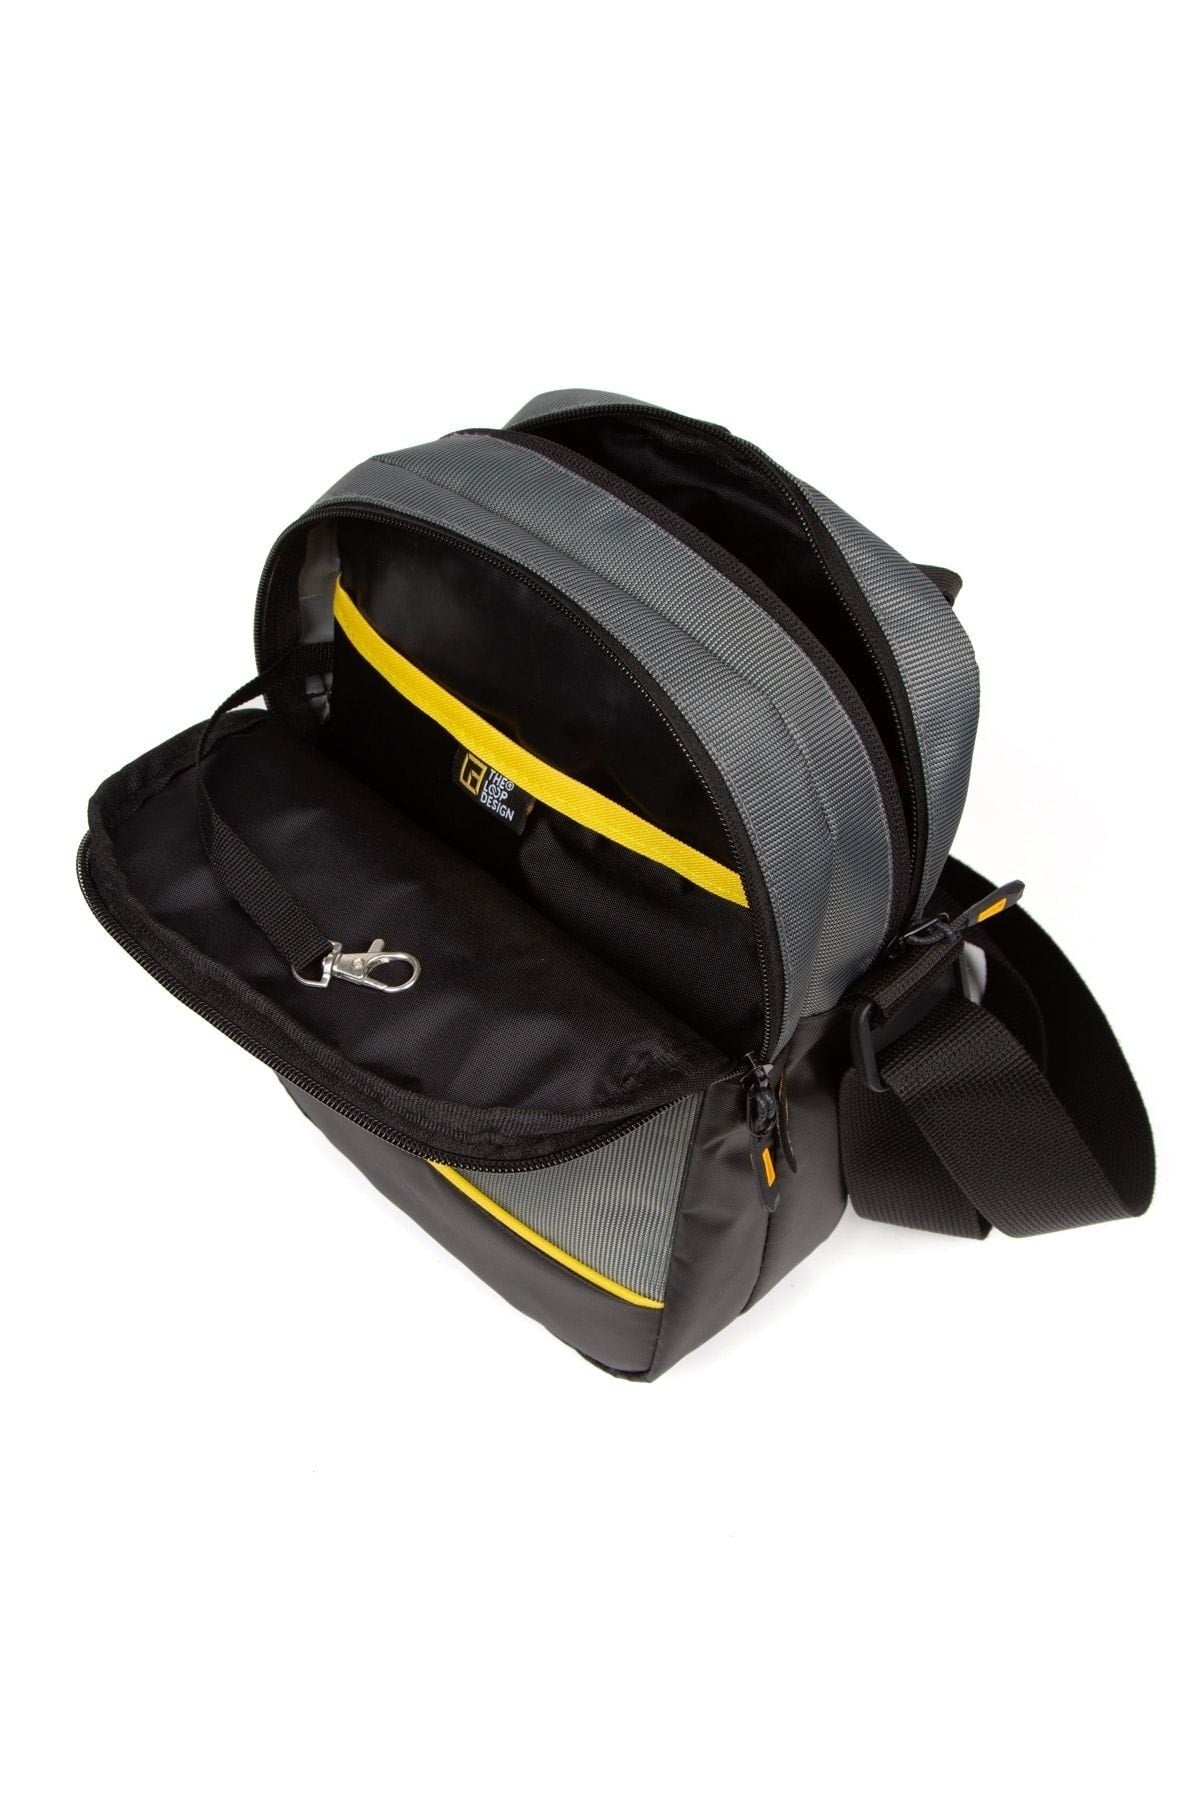 Unisex Gray 6 Compartment Adjustable Long Strap Waterproof Portfolio Bag Cross Hand And Shoulder Bag